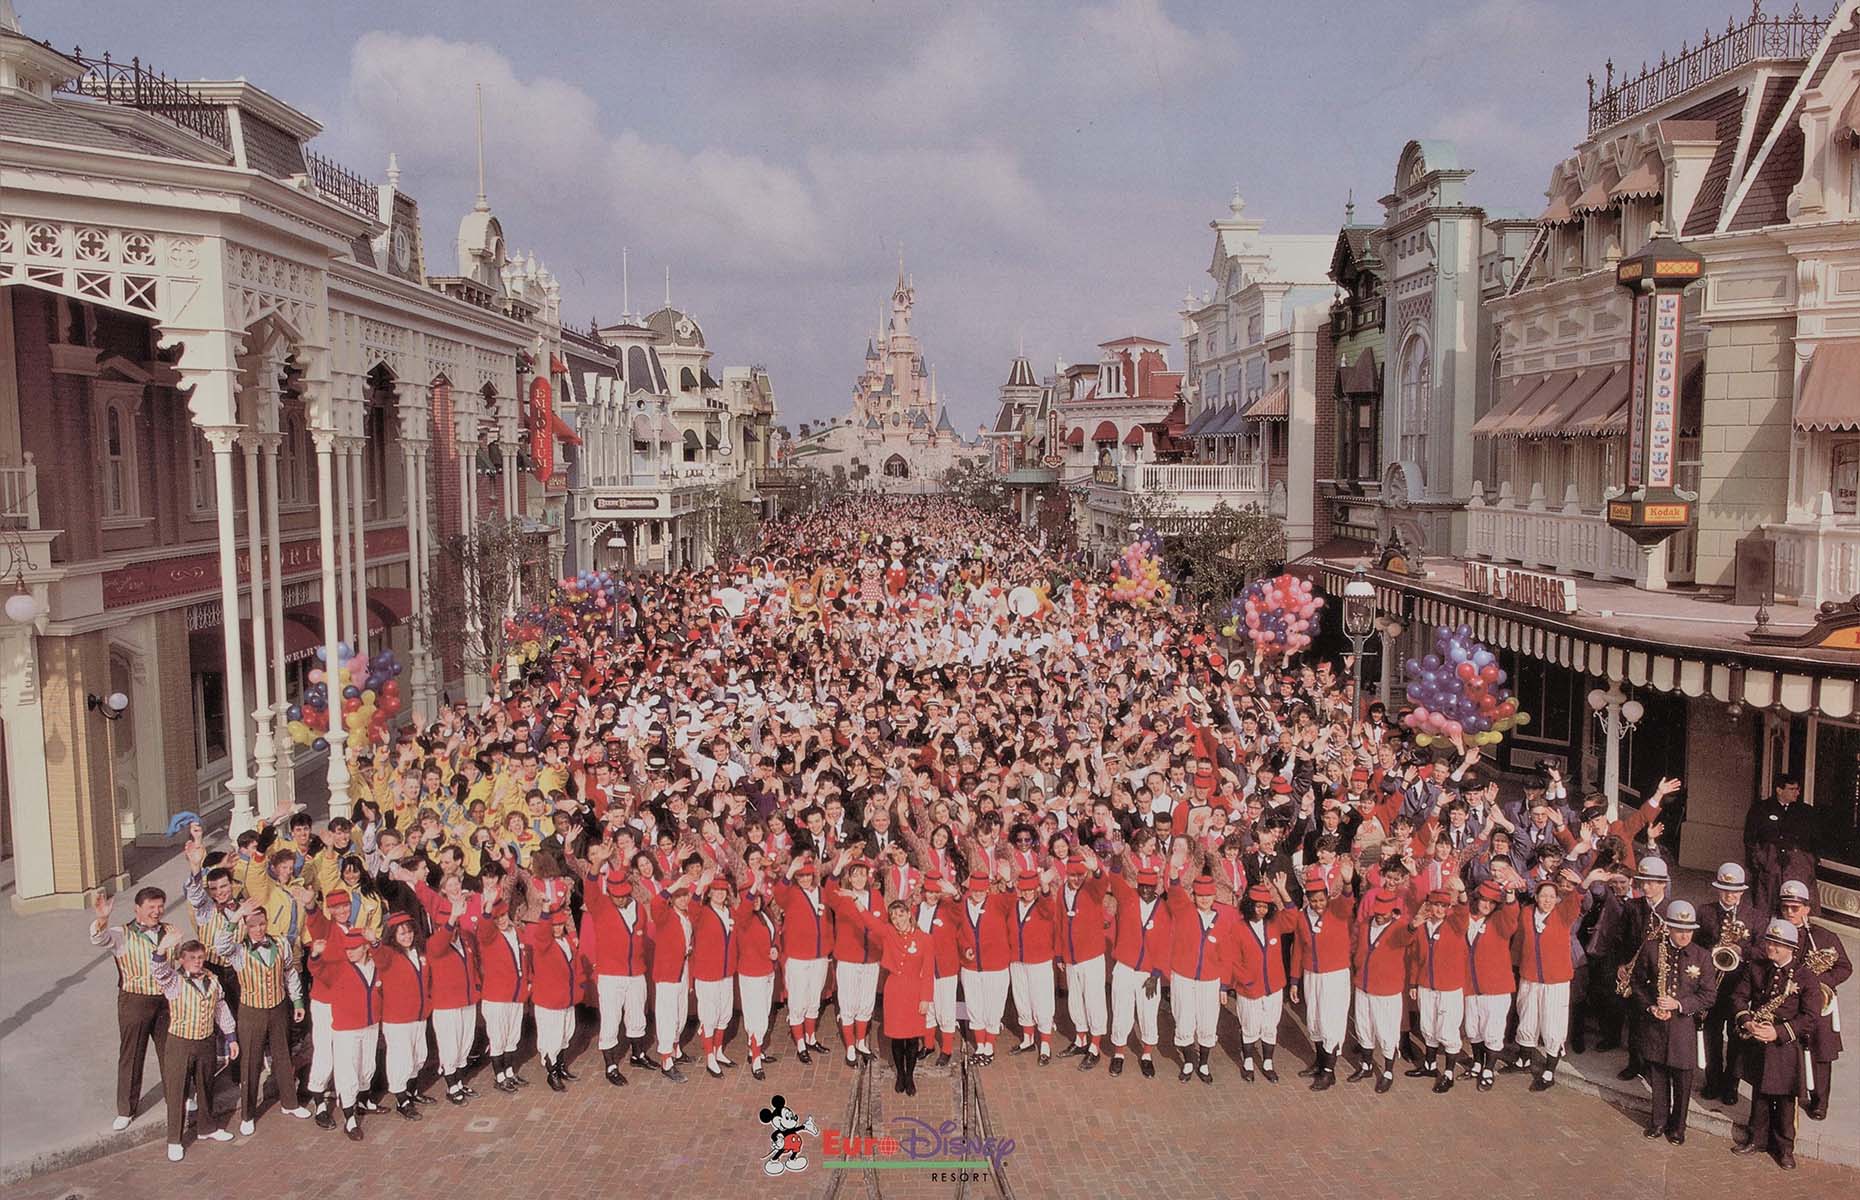 Disneyland Paris opening day (Image: Courtesy of Lauren Jarvis)